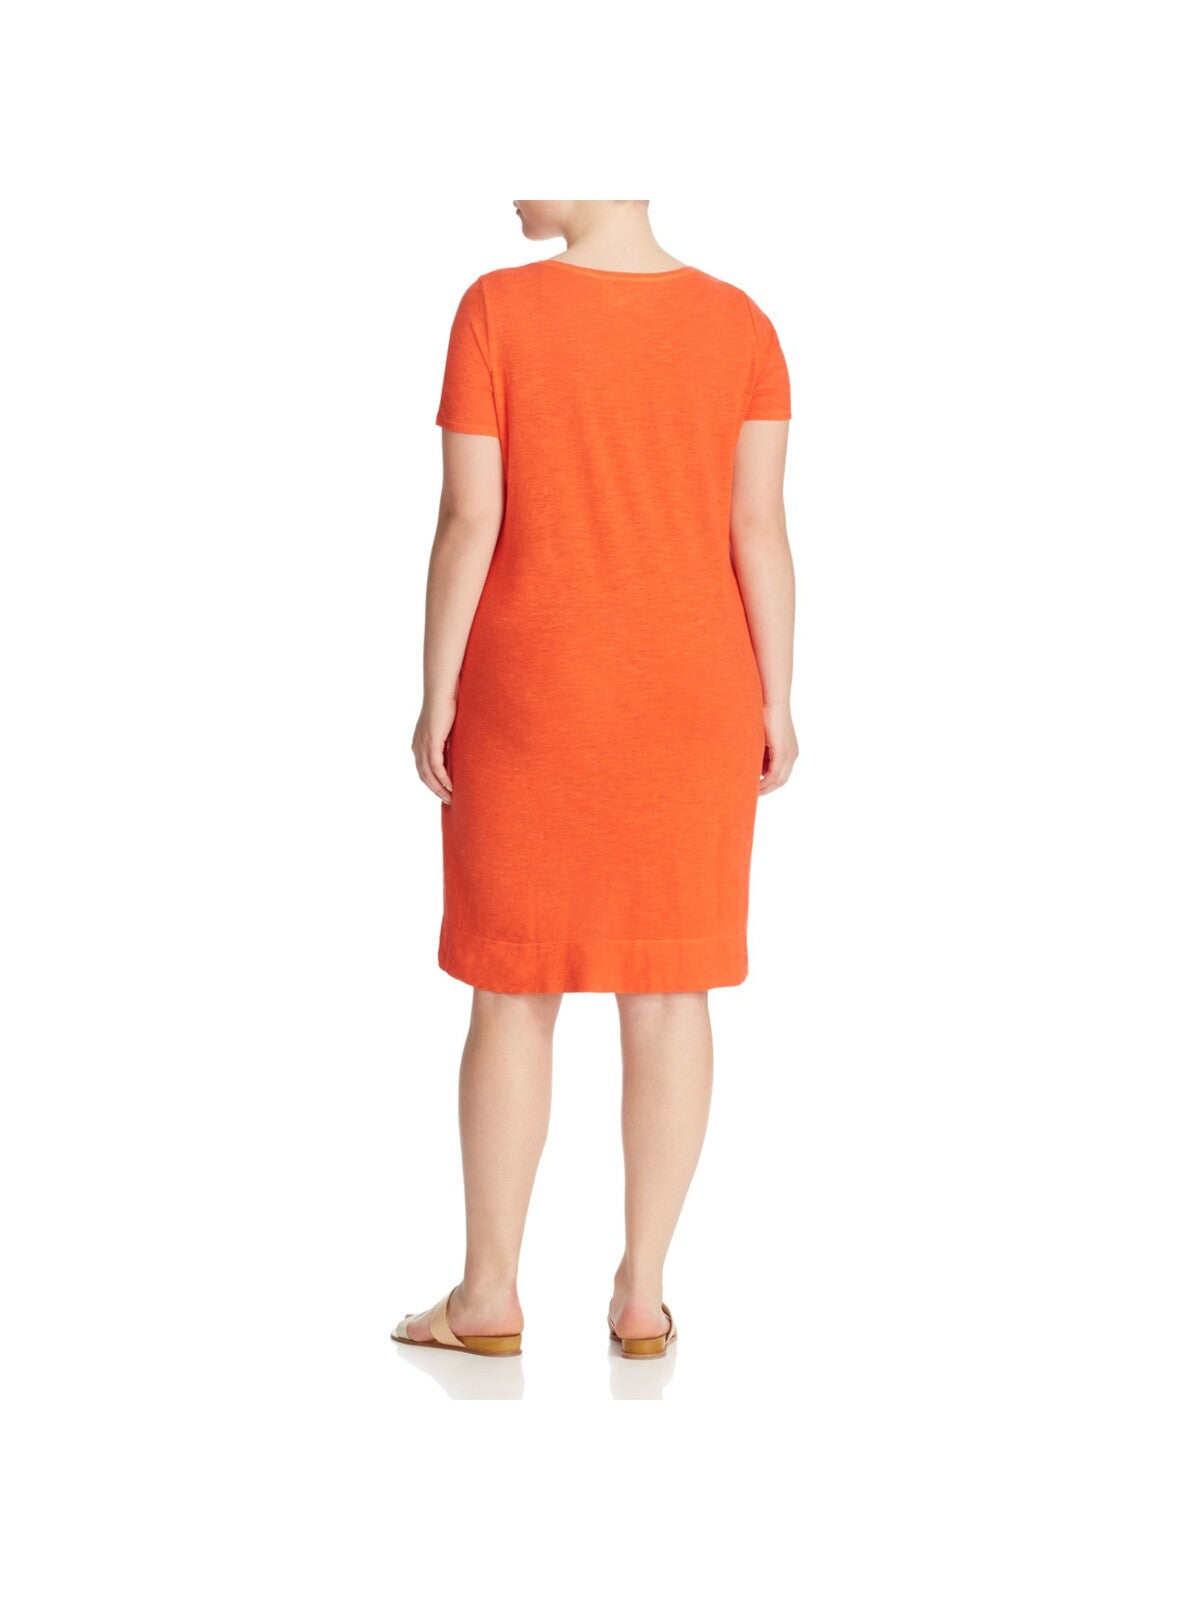 EILEEN FISHER Womens Orange Pocketed Vented Step Hem Short Sleeve Scoop Neck Above The Knee Shift Dress Plus 2X